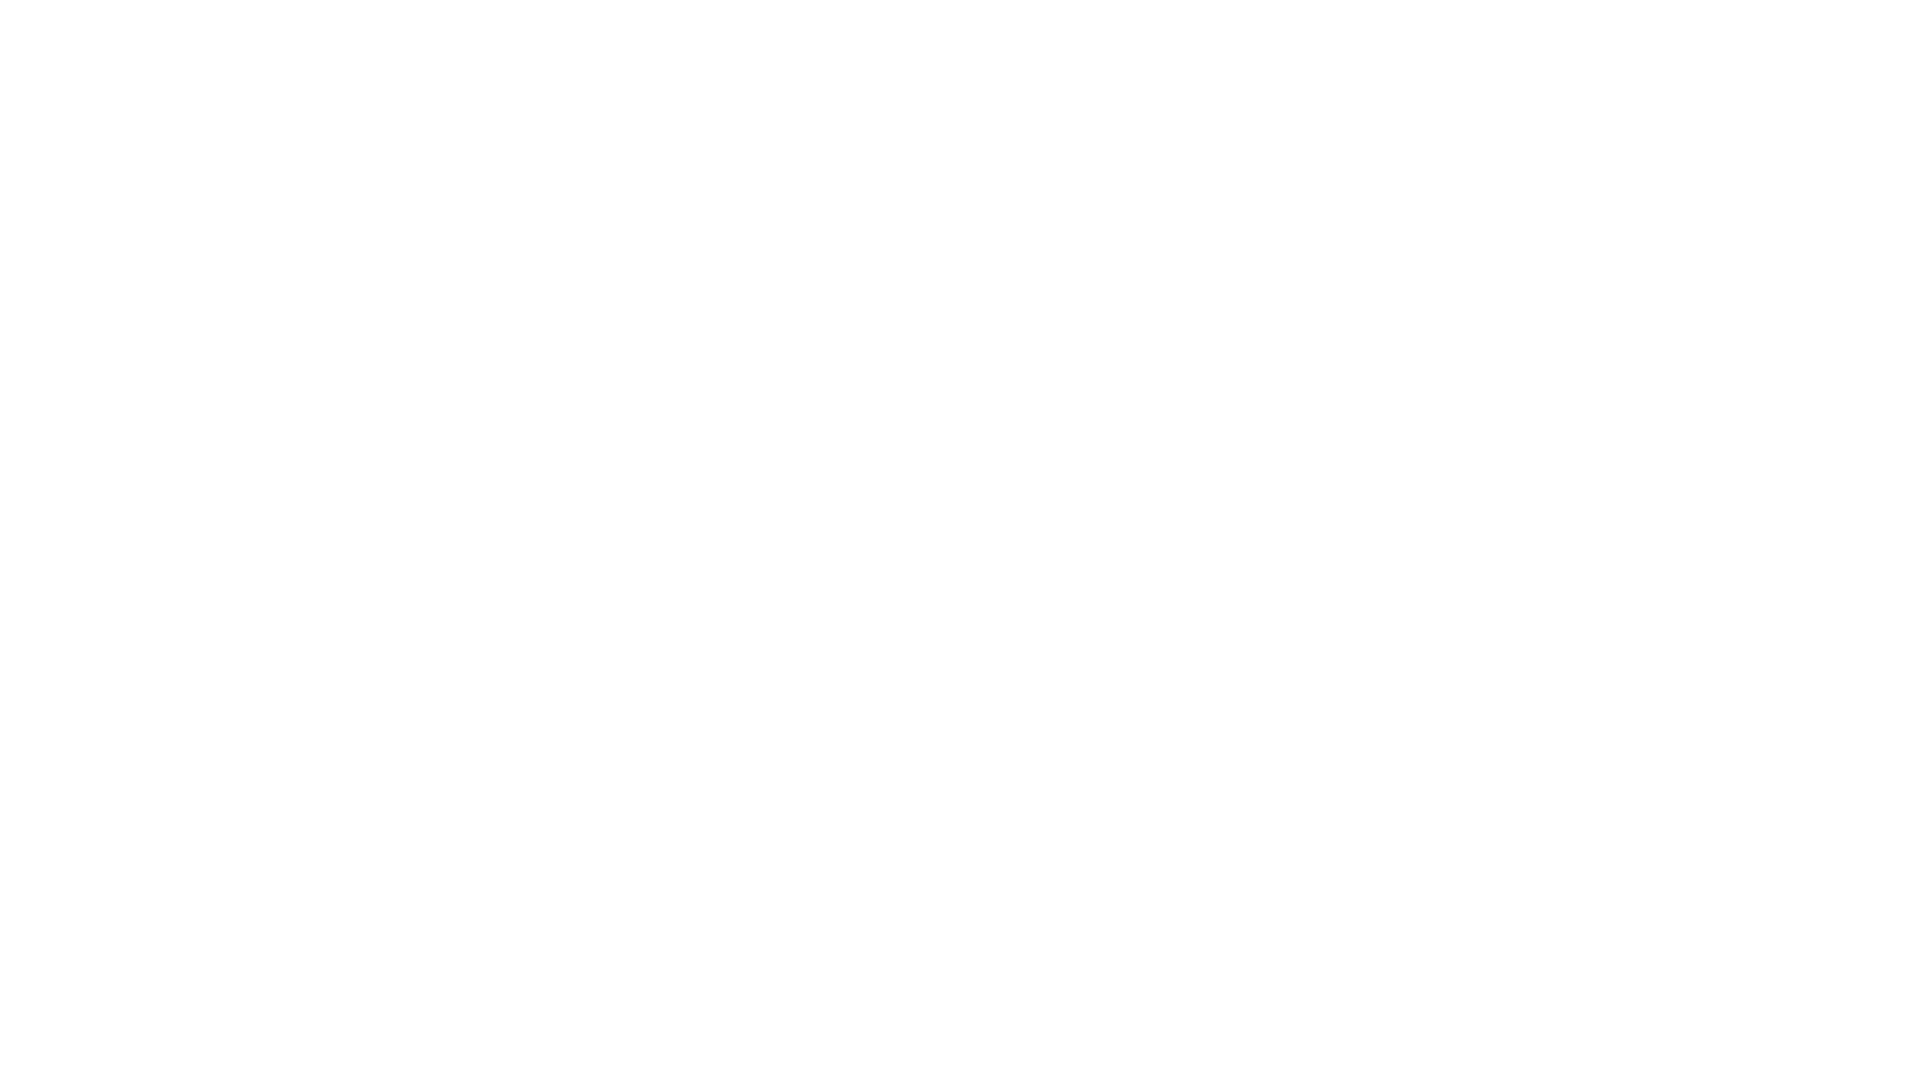 Advanced OEM Solutions